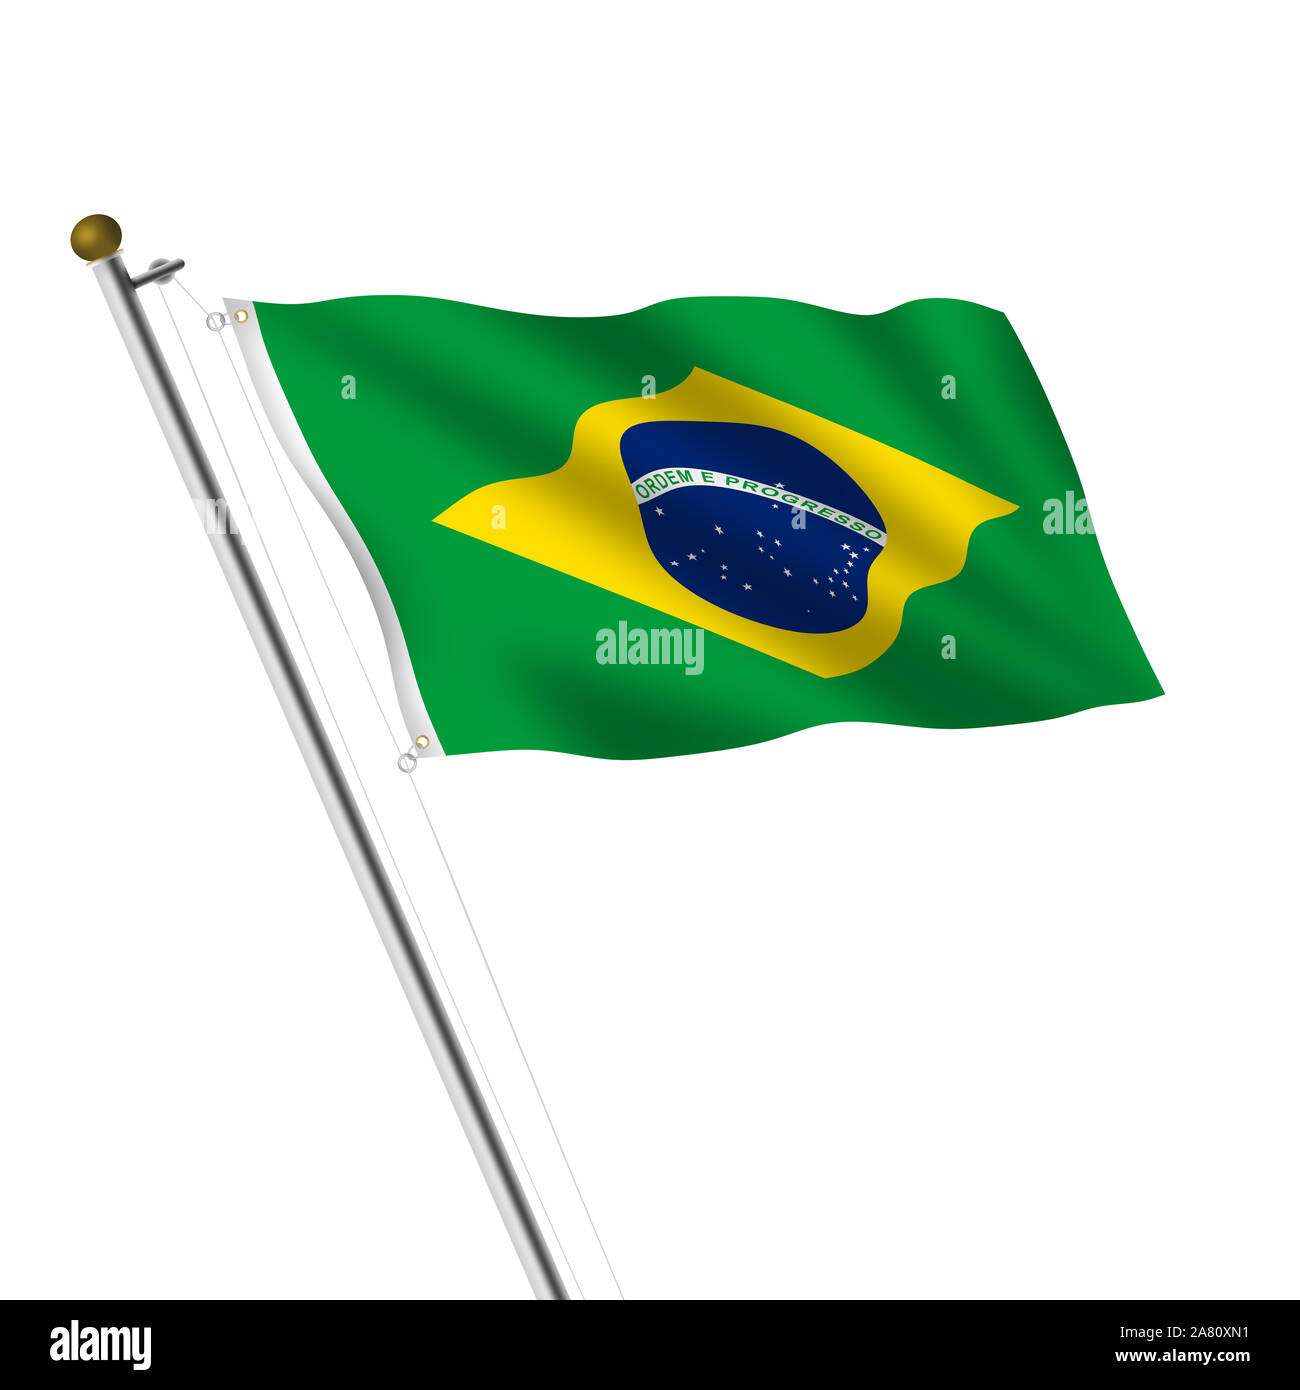 A Brasil Brazil Flagpole Verde e amarela illustration on white with clipping path Stock Photo